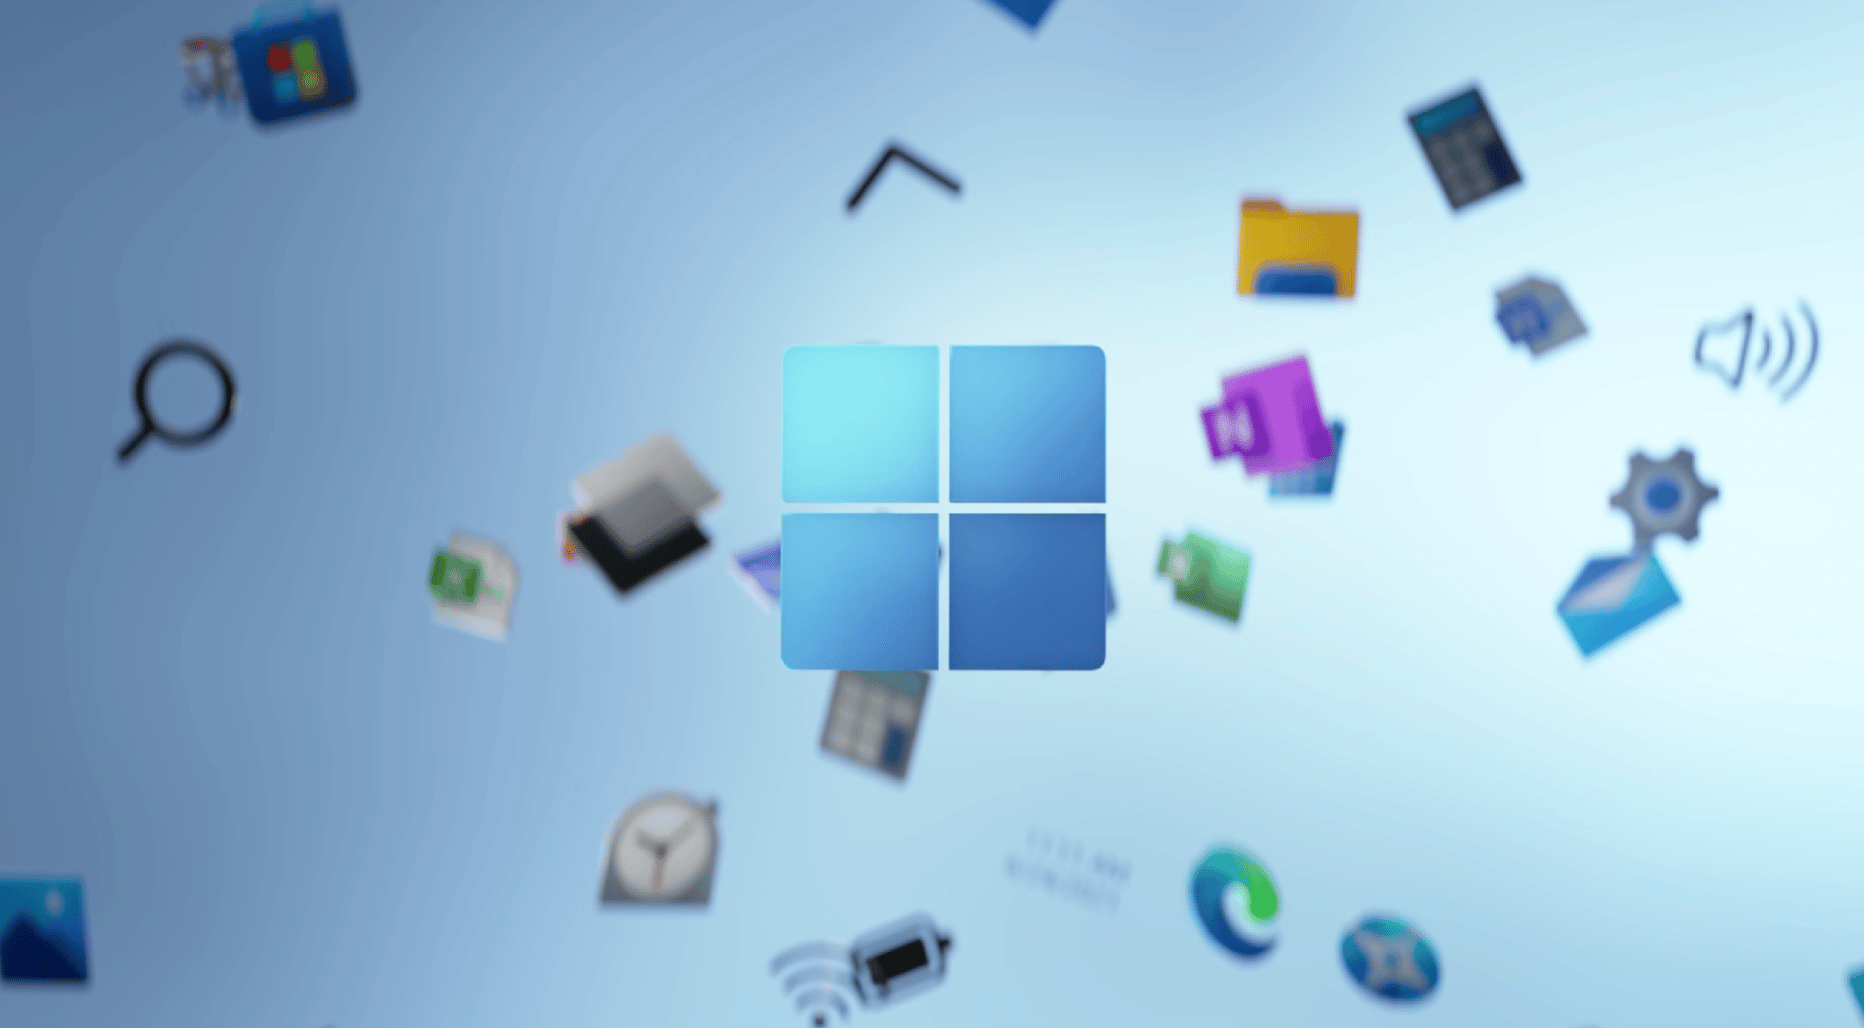 Windows 11 features